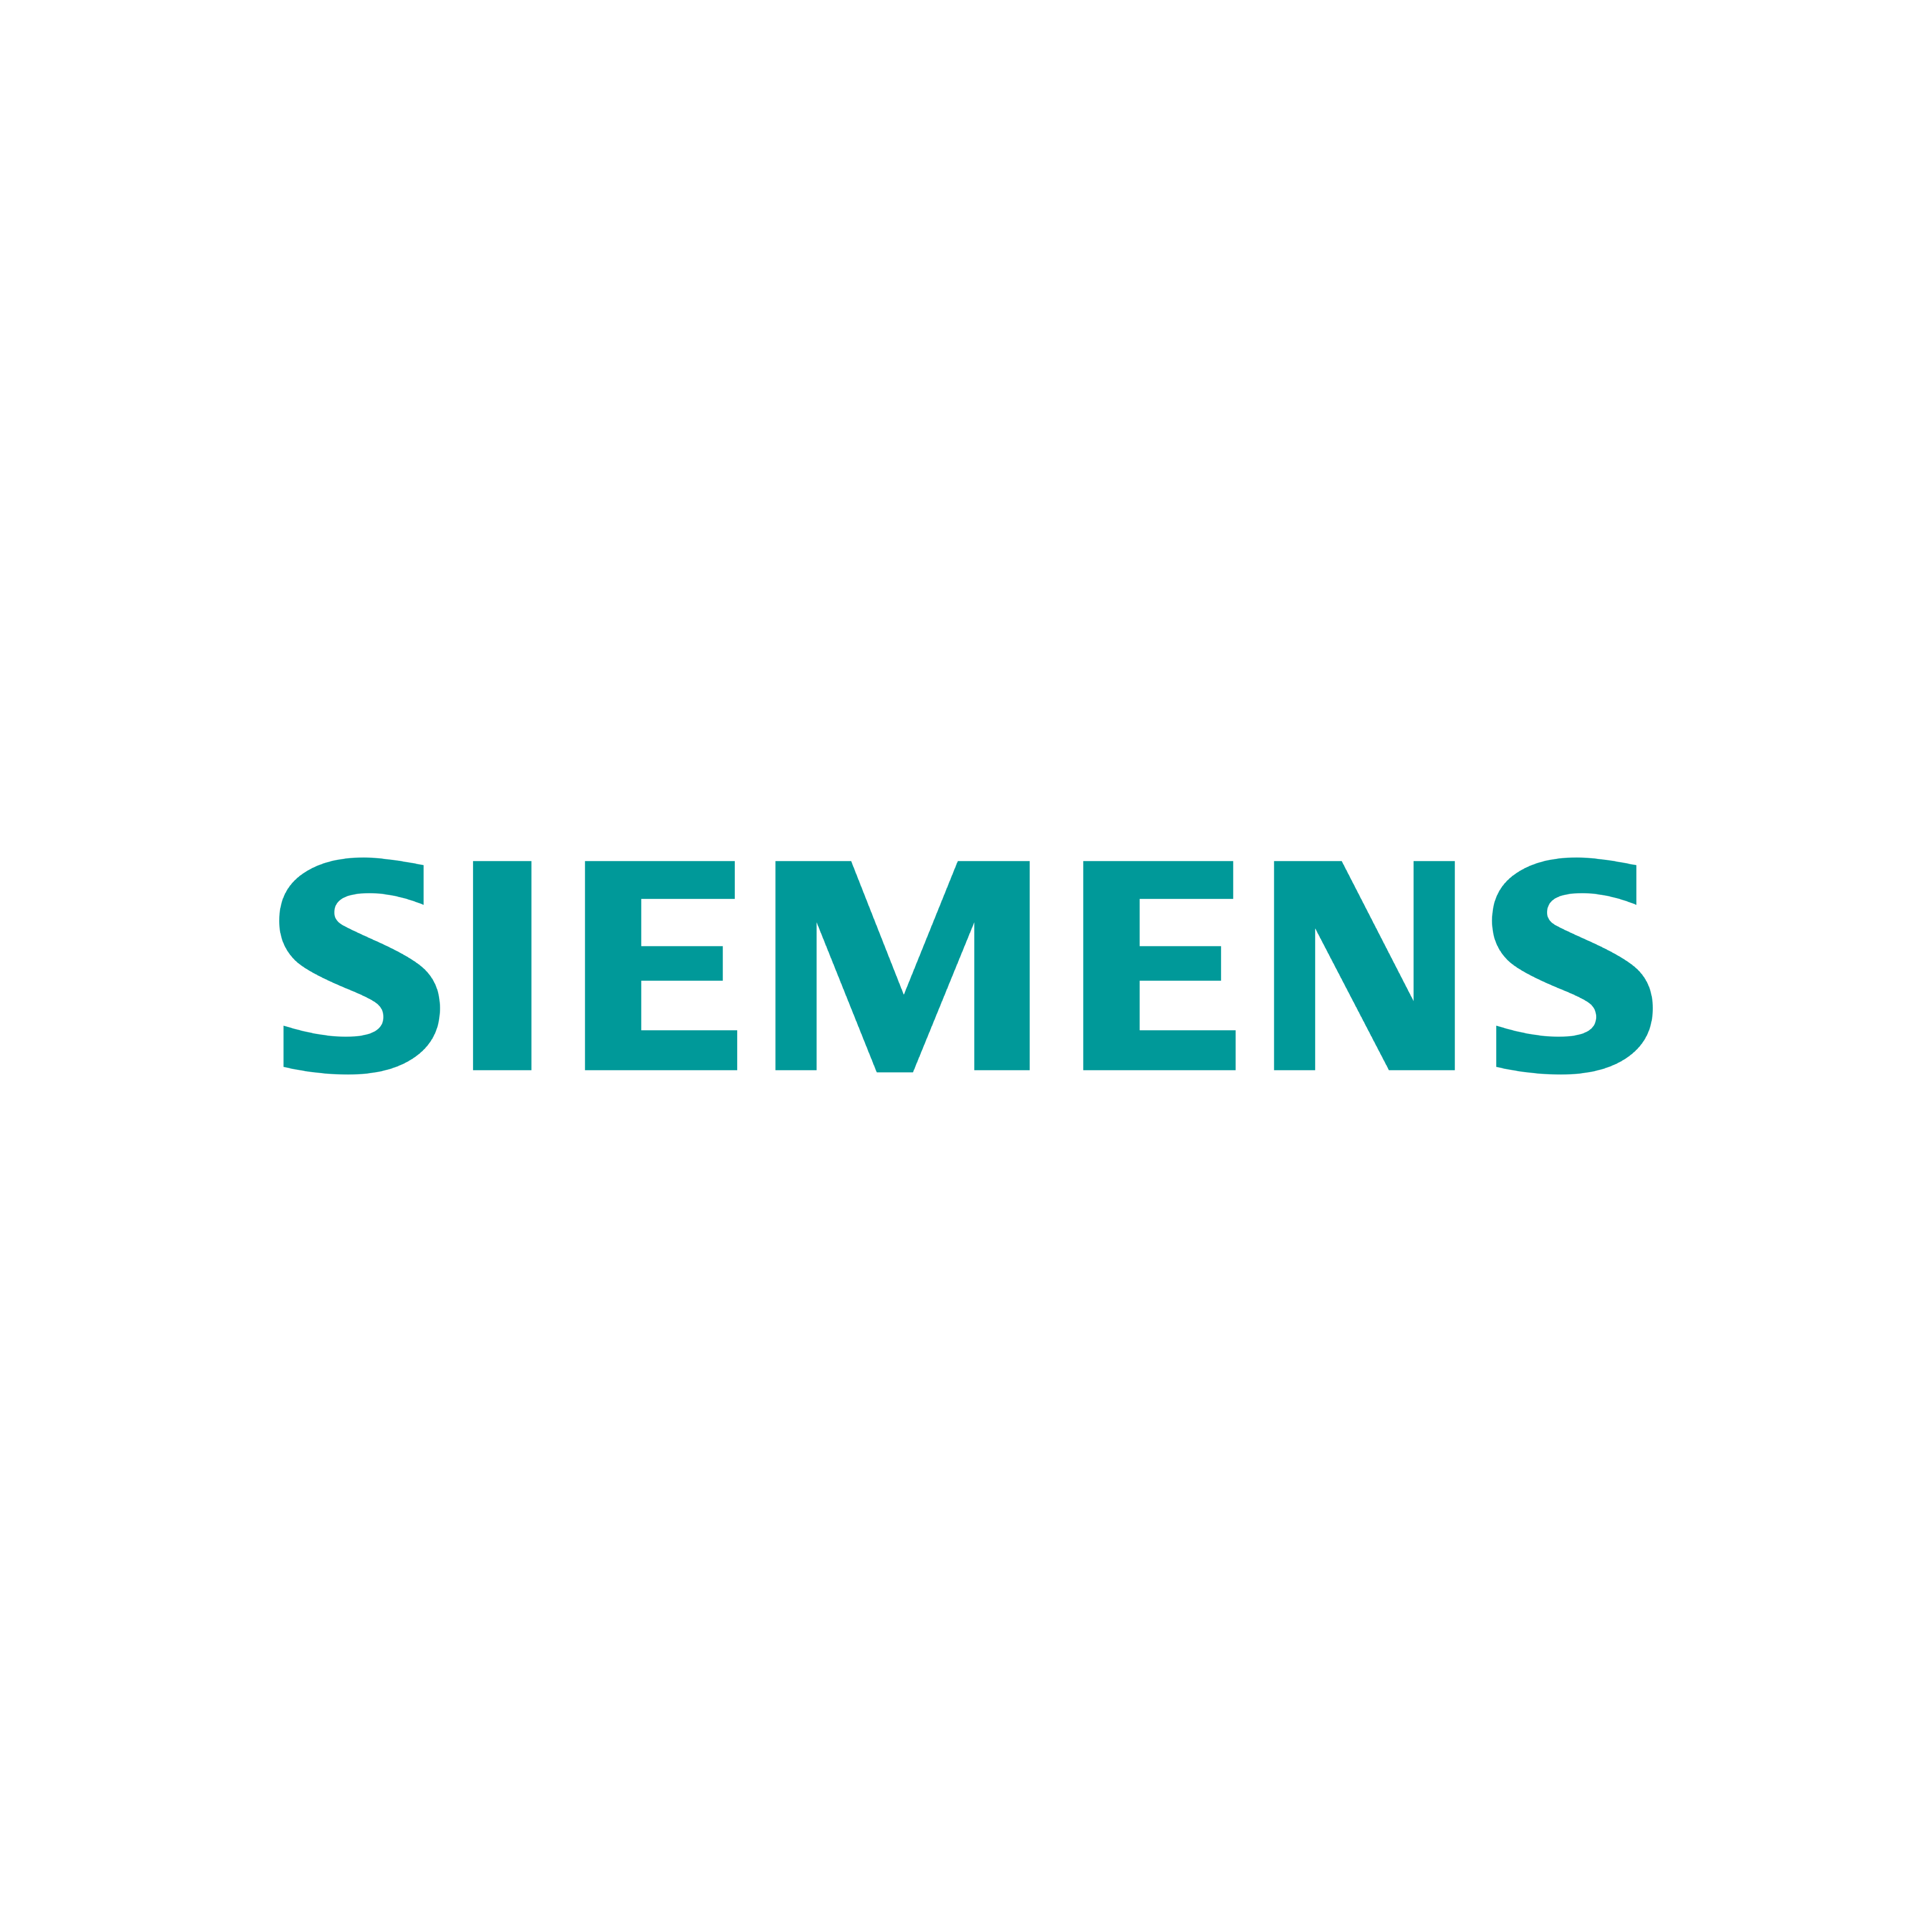 siemens-logo (1)